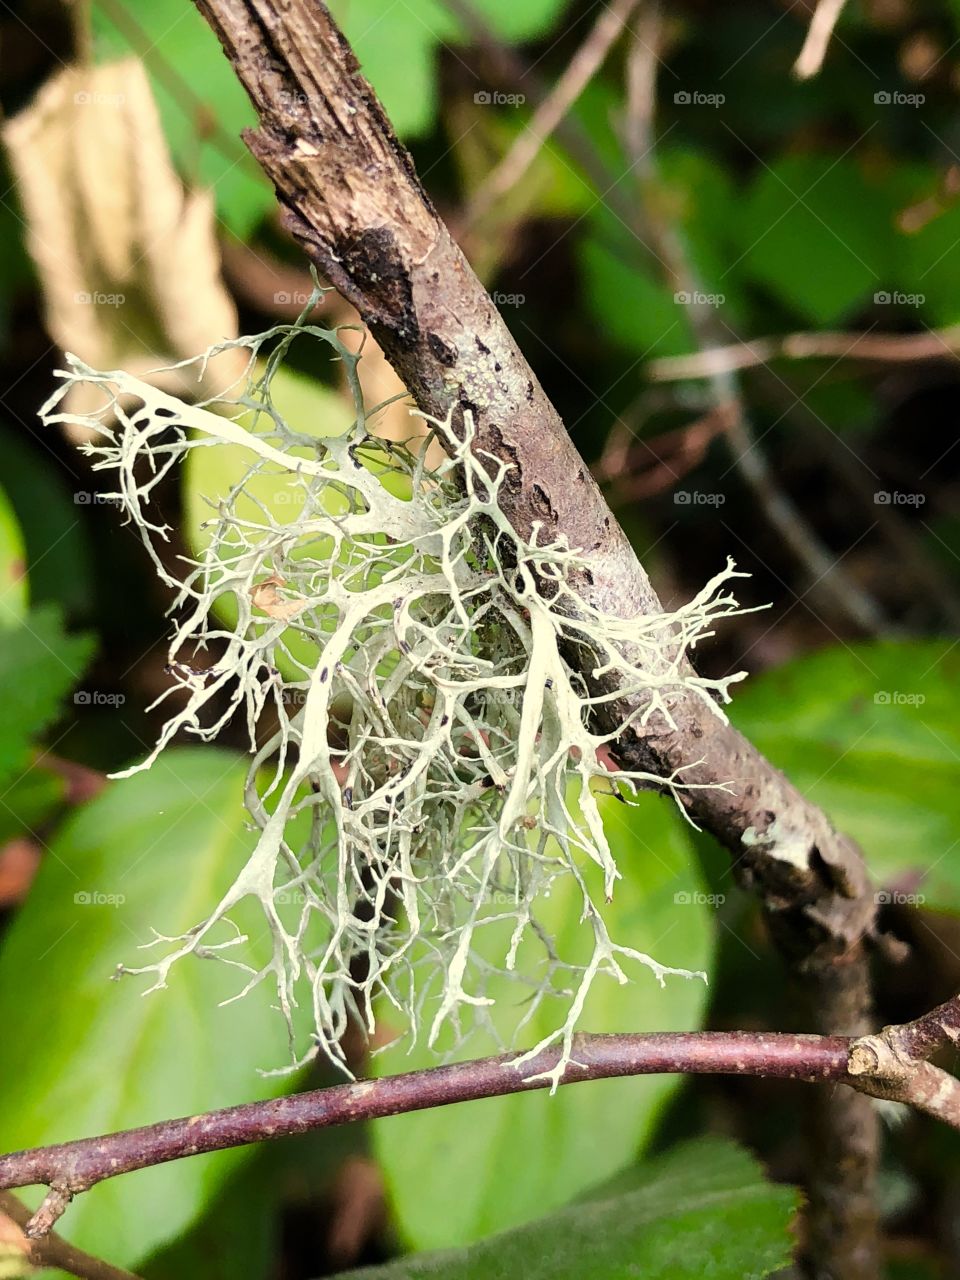 Lichen Moss On Tree Branch Twig